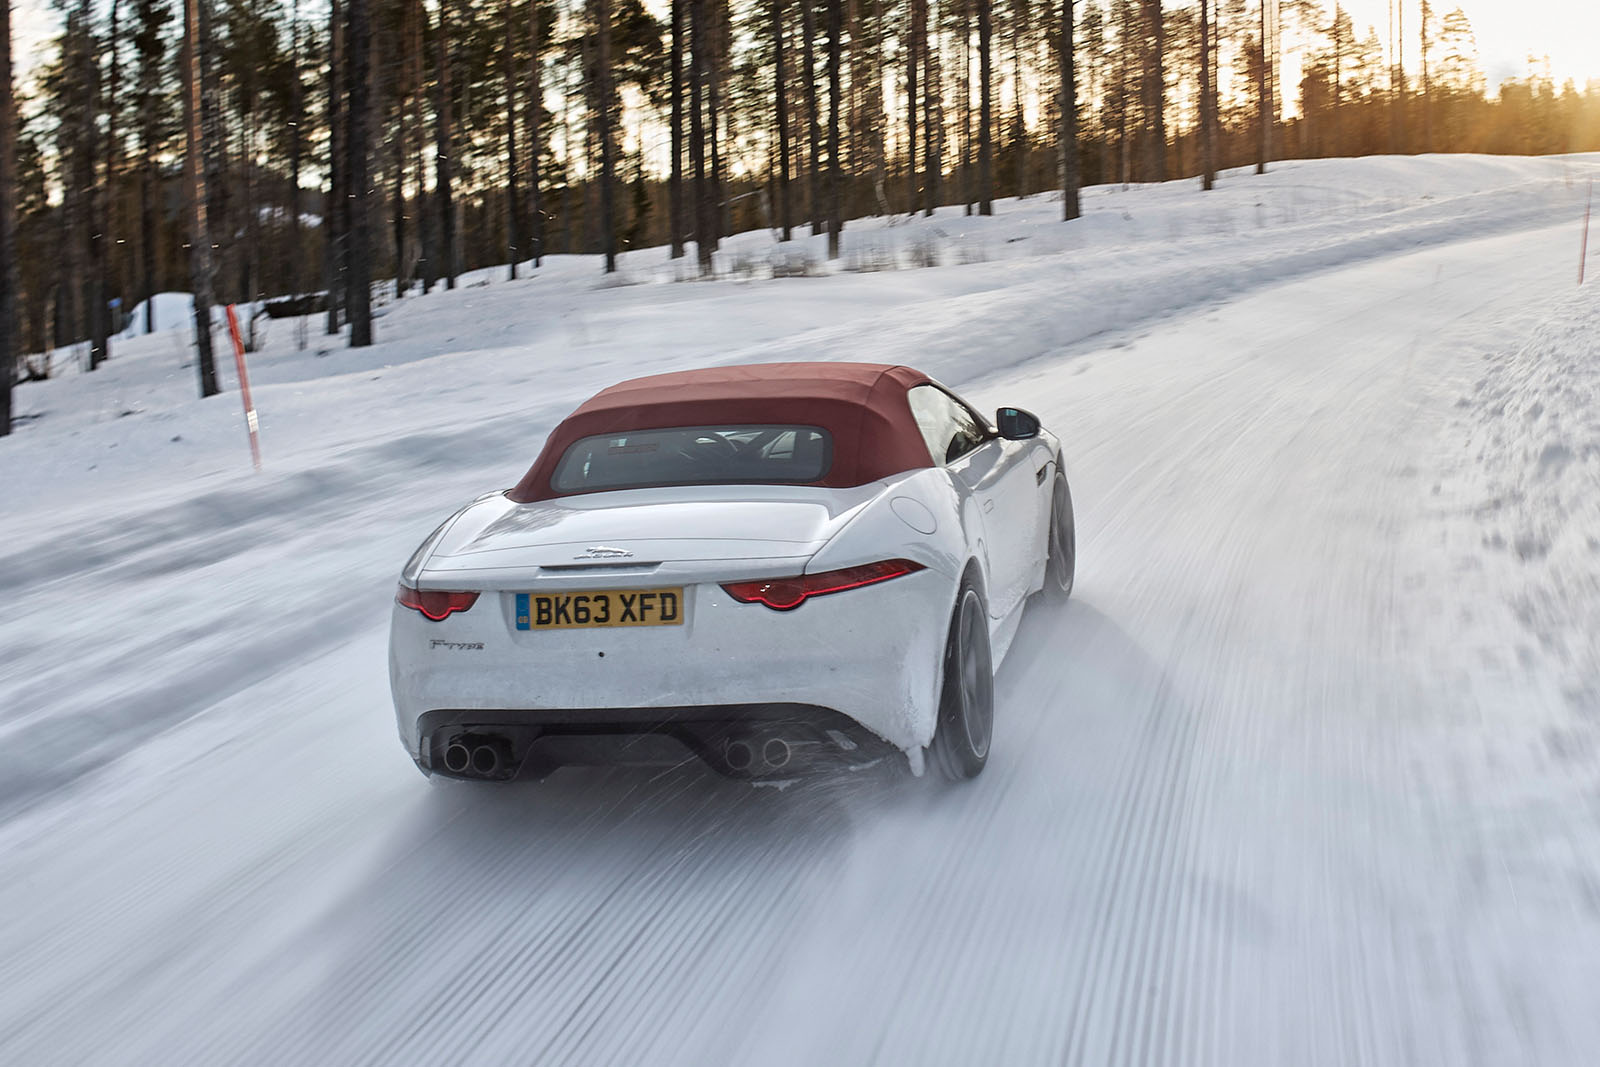 https://www.autocar.co.uk/sites/autocar.co.uk/files/images/car-reviews/first-drives/legacy/jaguar-f-type-rear-in-snow.jpg